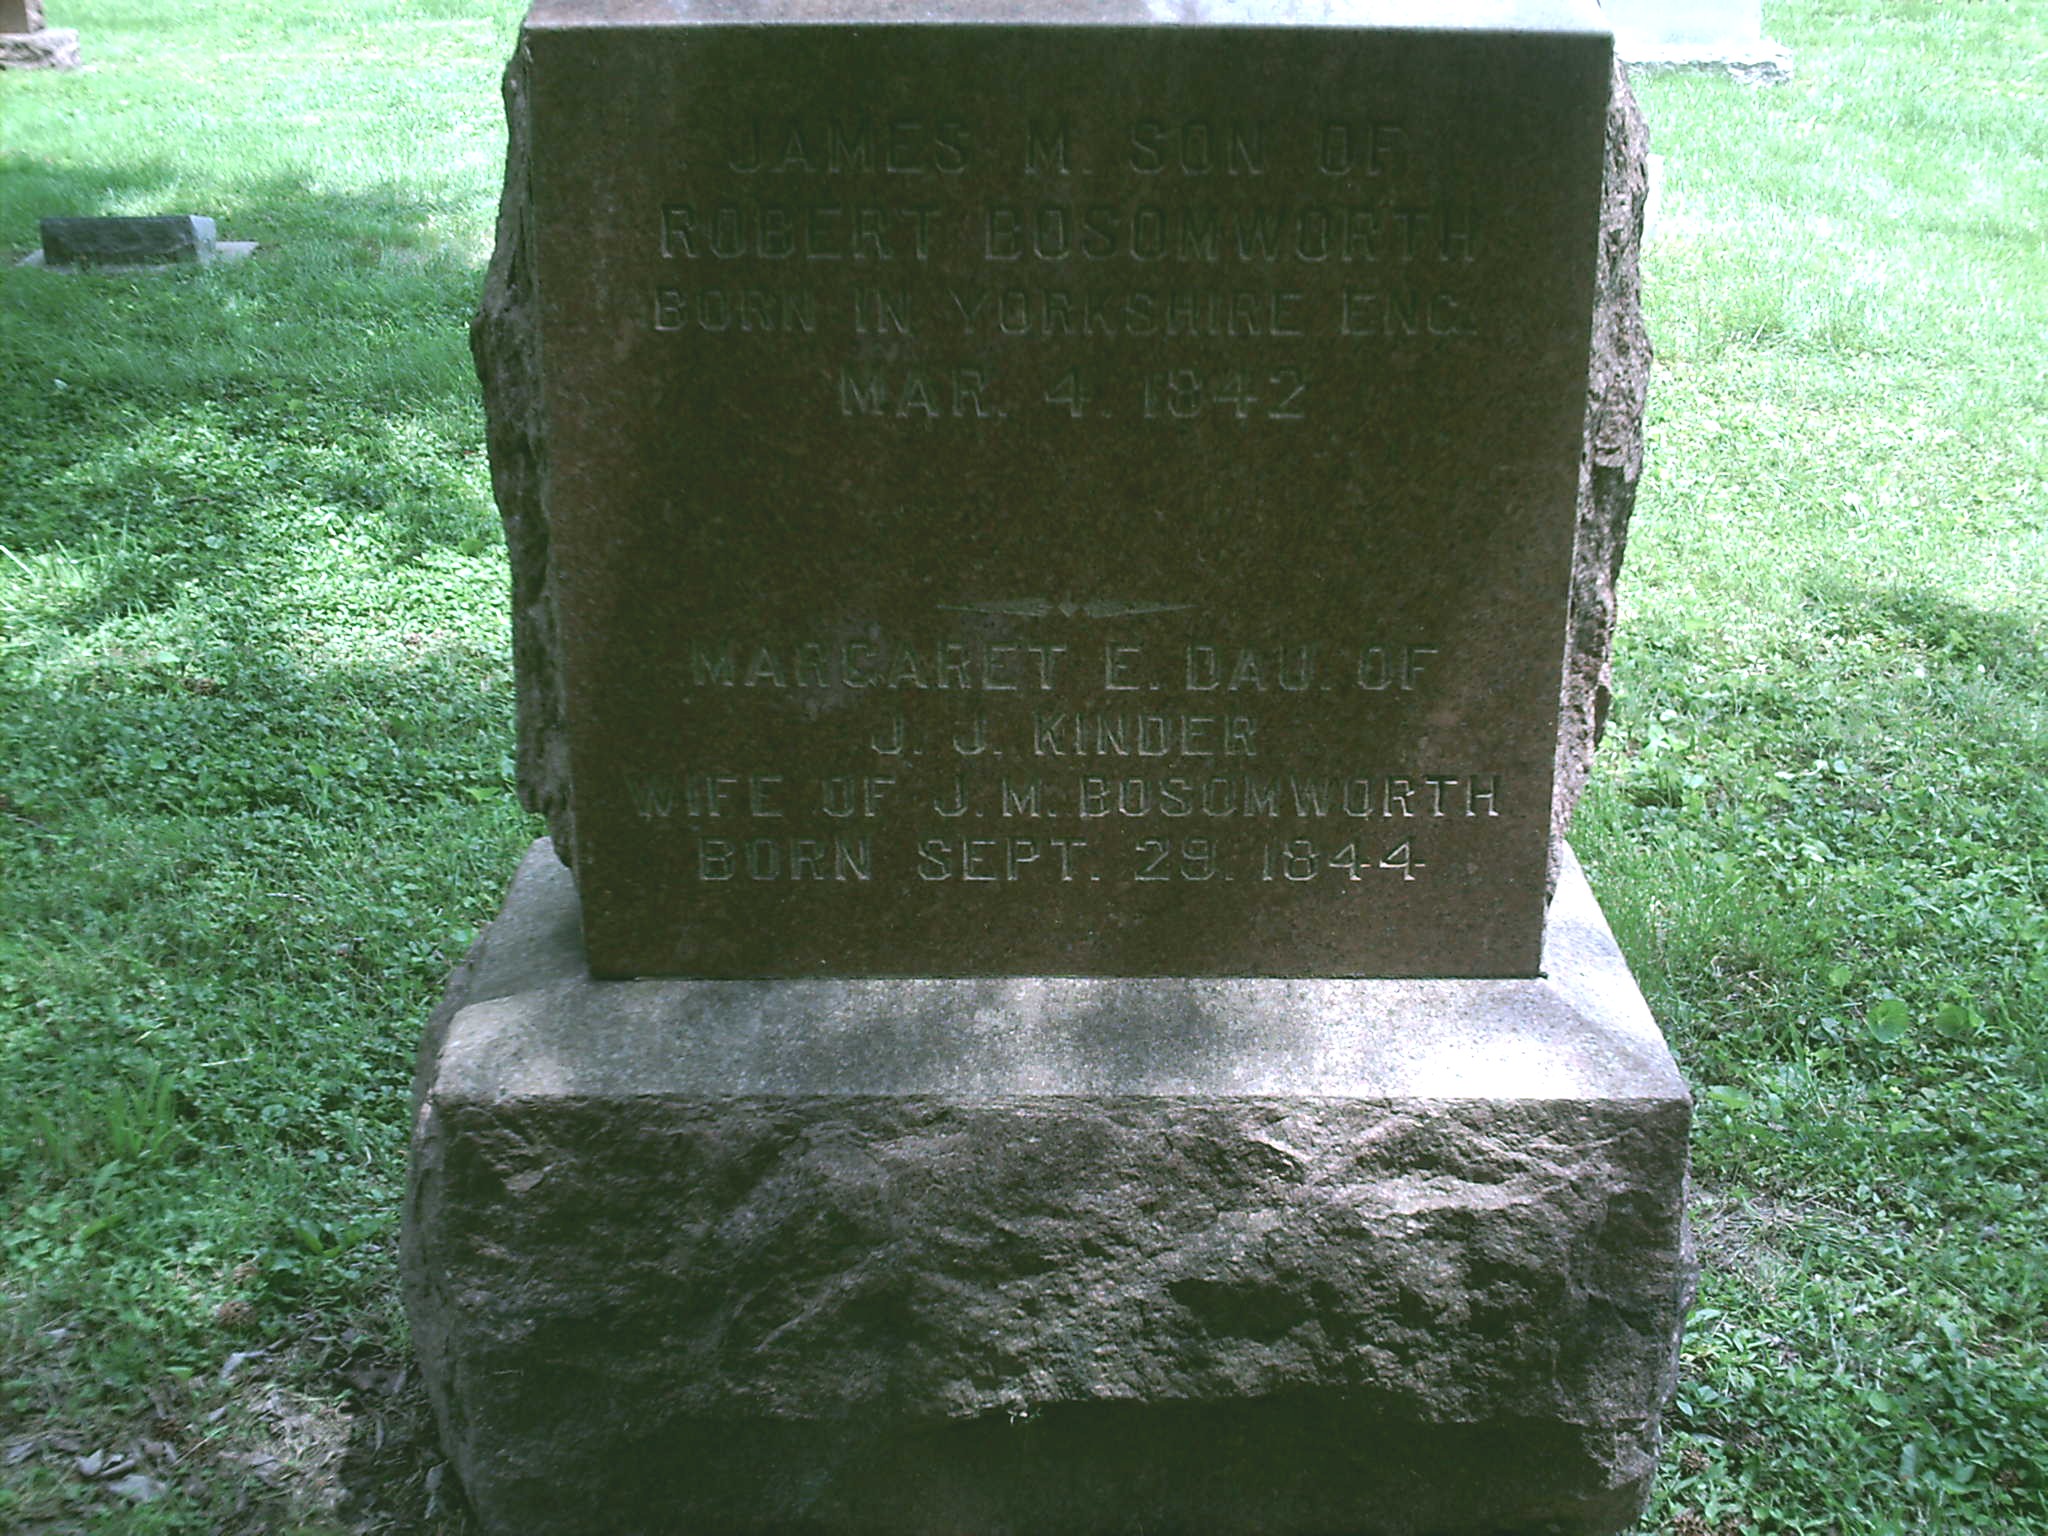 James M. and Margaret E. Bosomworth Headstone